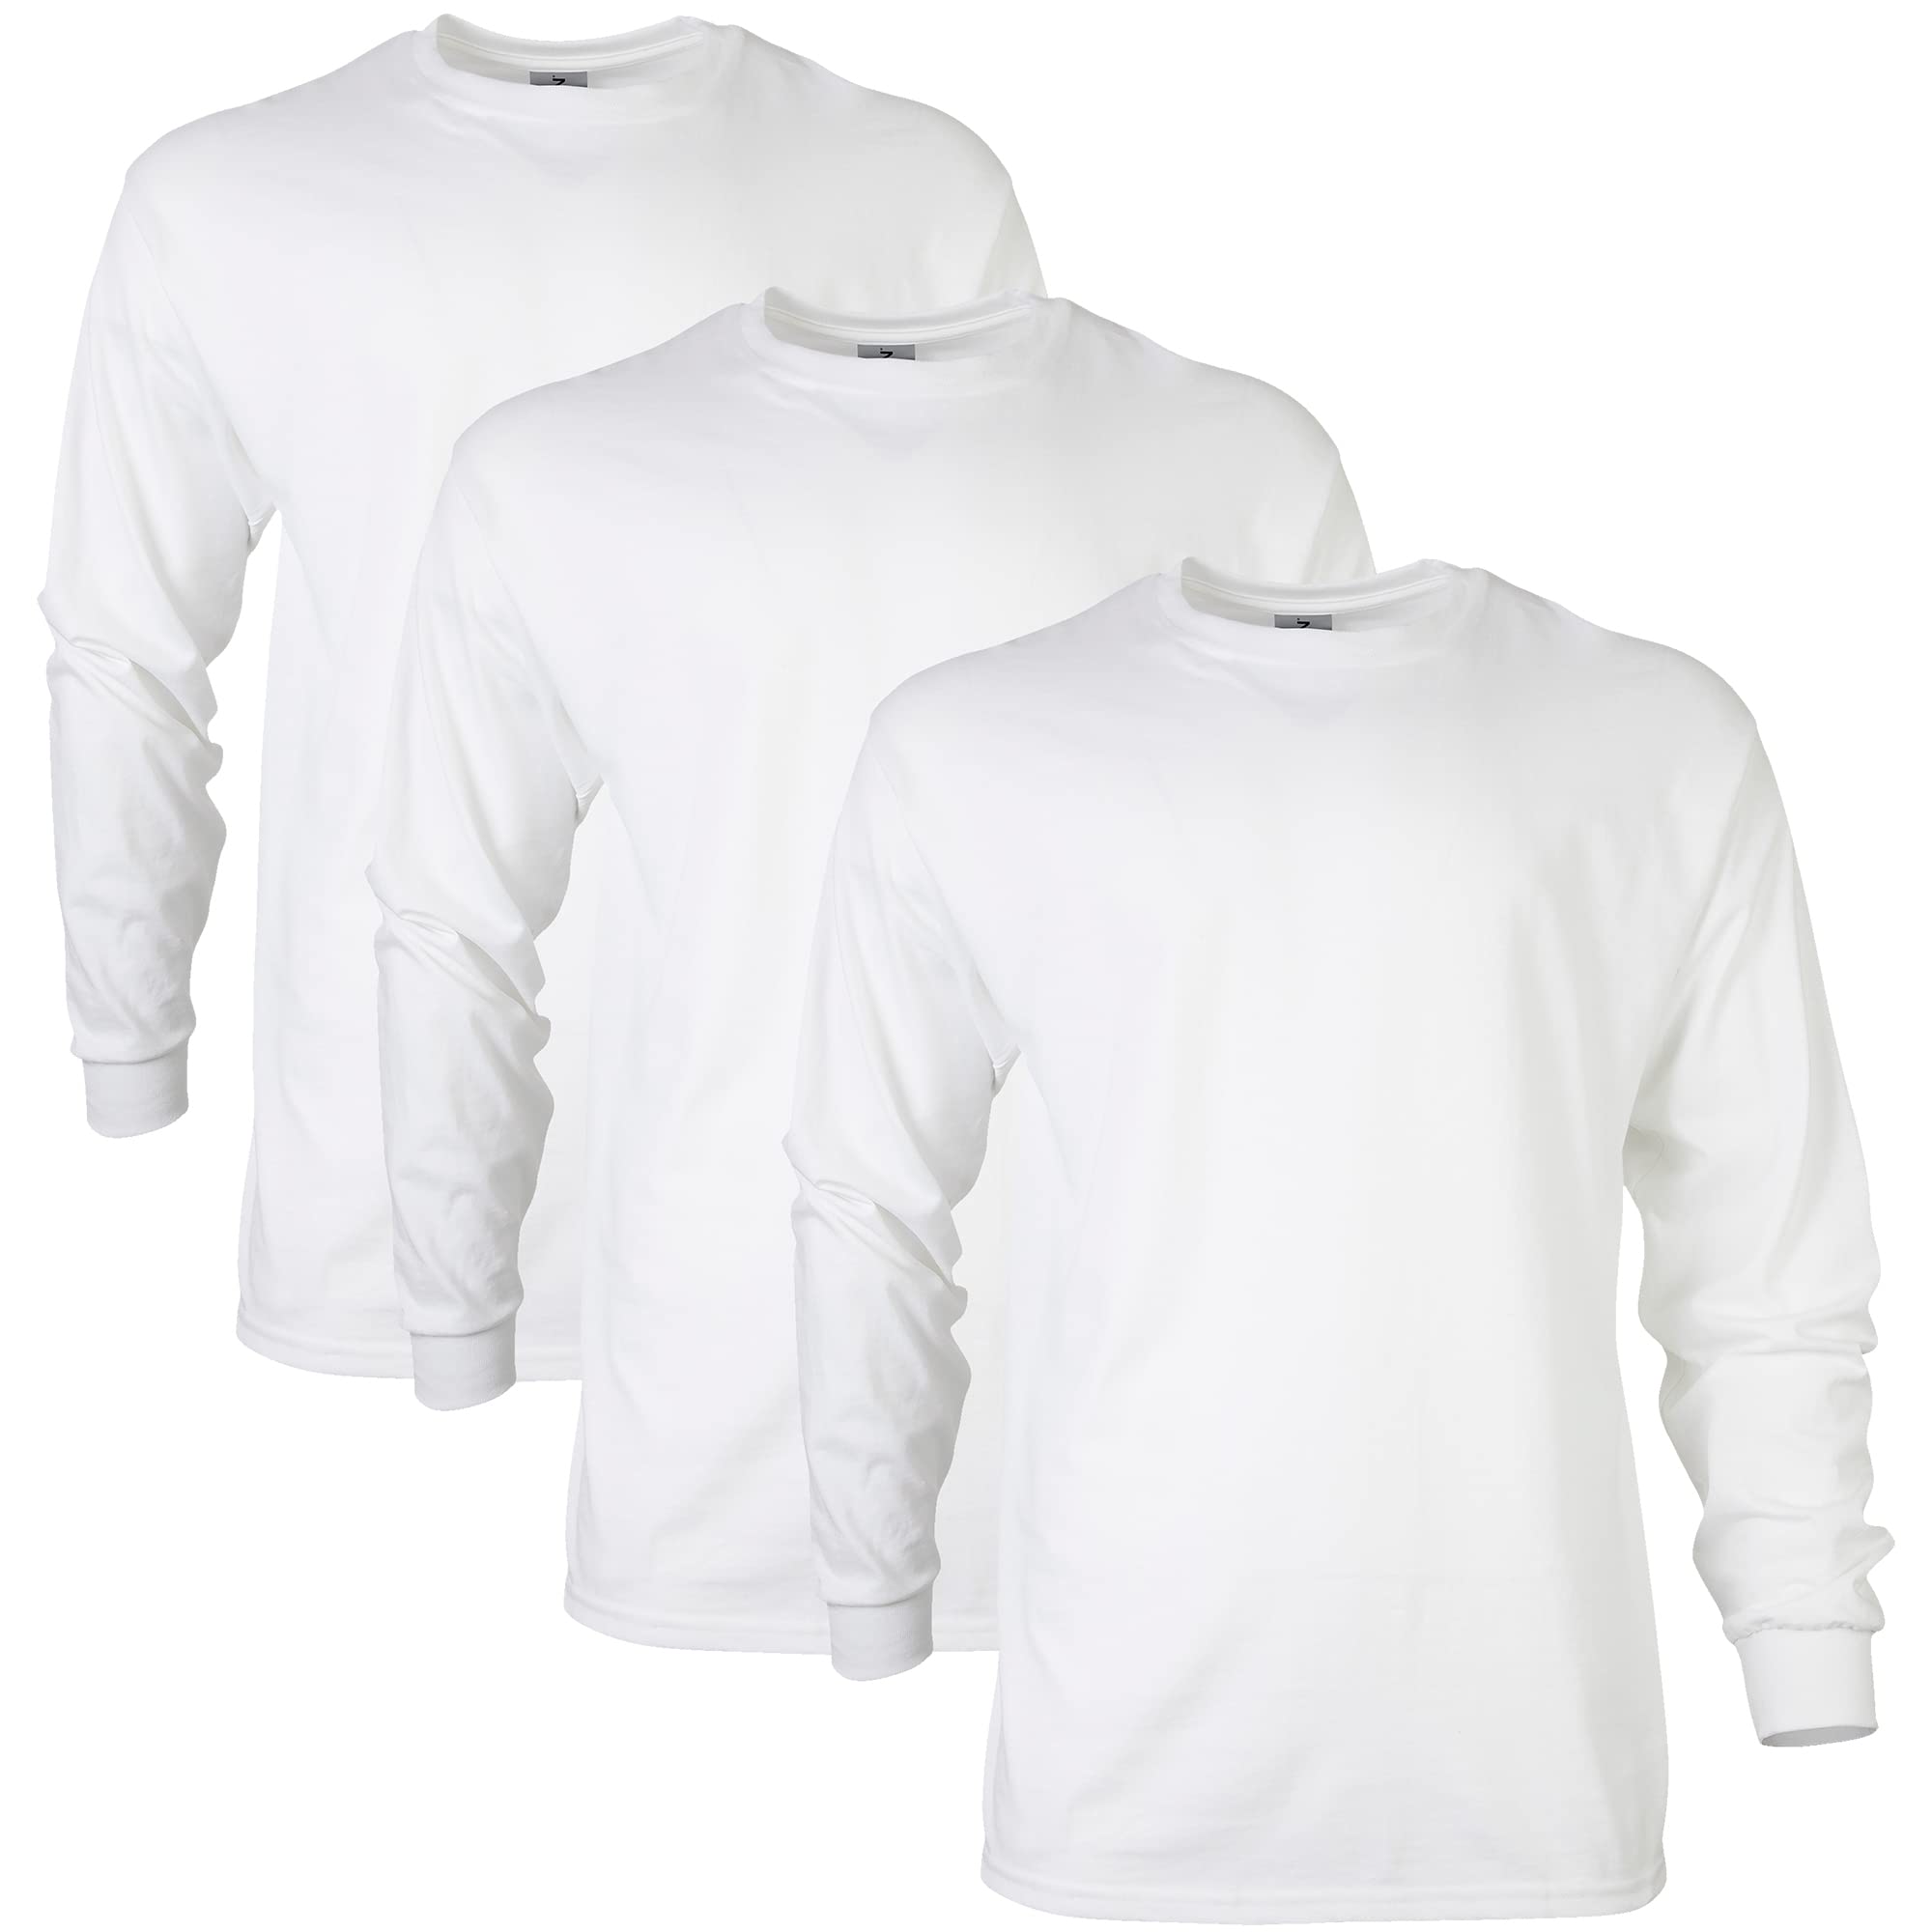 Gildan Ultra Cotton Long Sleeve T-Shirt, Style G2400, Multipack